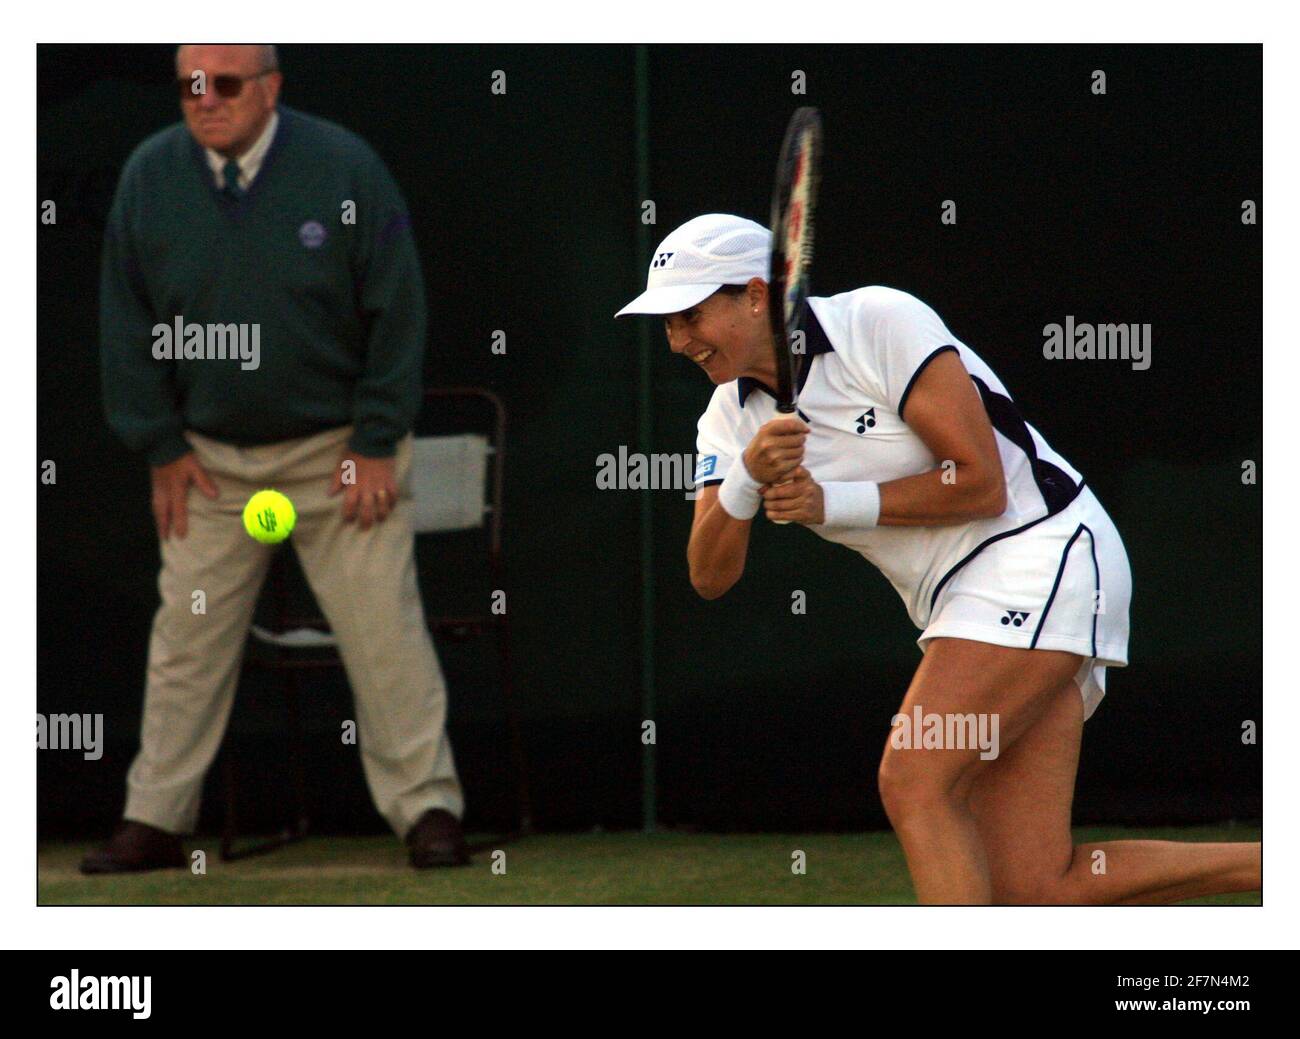 Wimbledon Monica Seles V T Tanasugarnpic David Sandison 1 7 2002 Stockfotografie Alamy